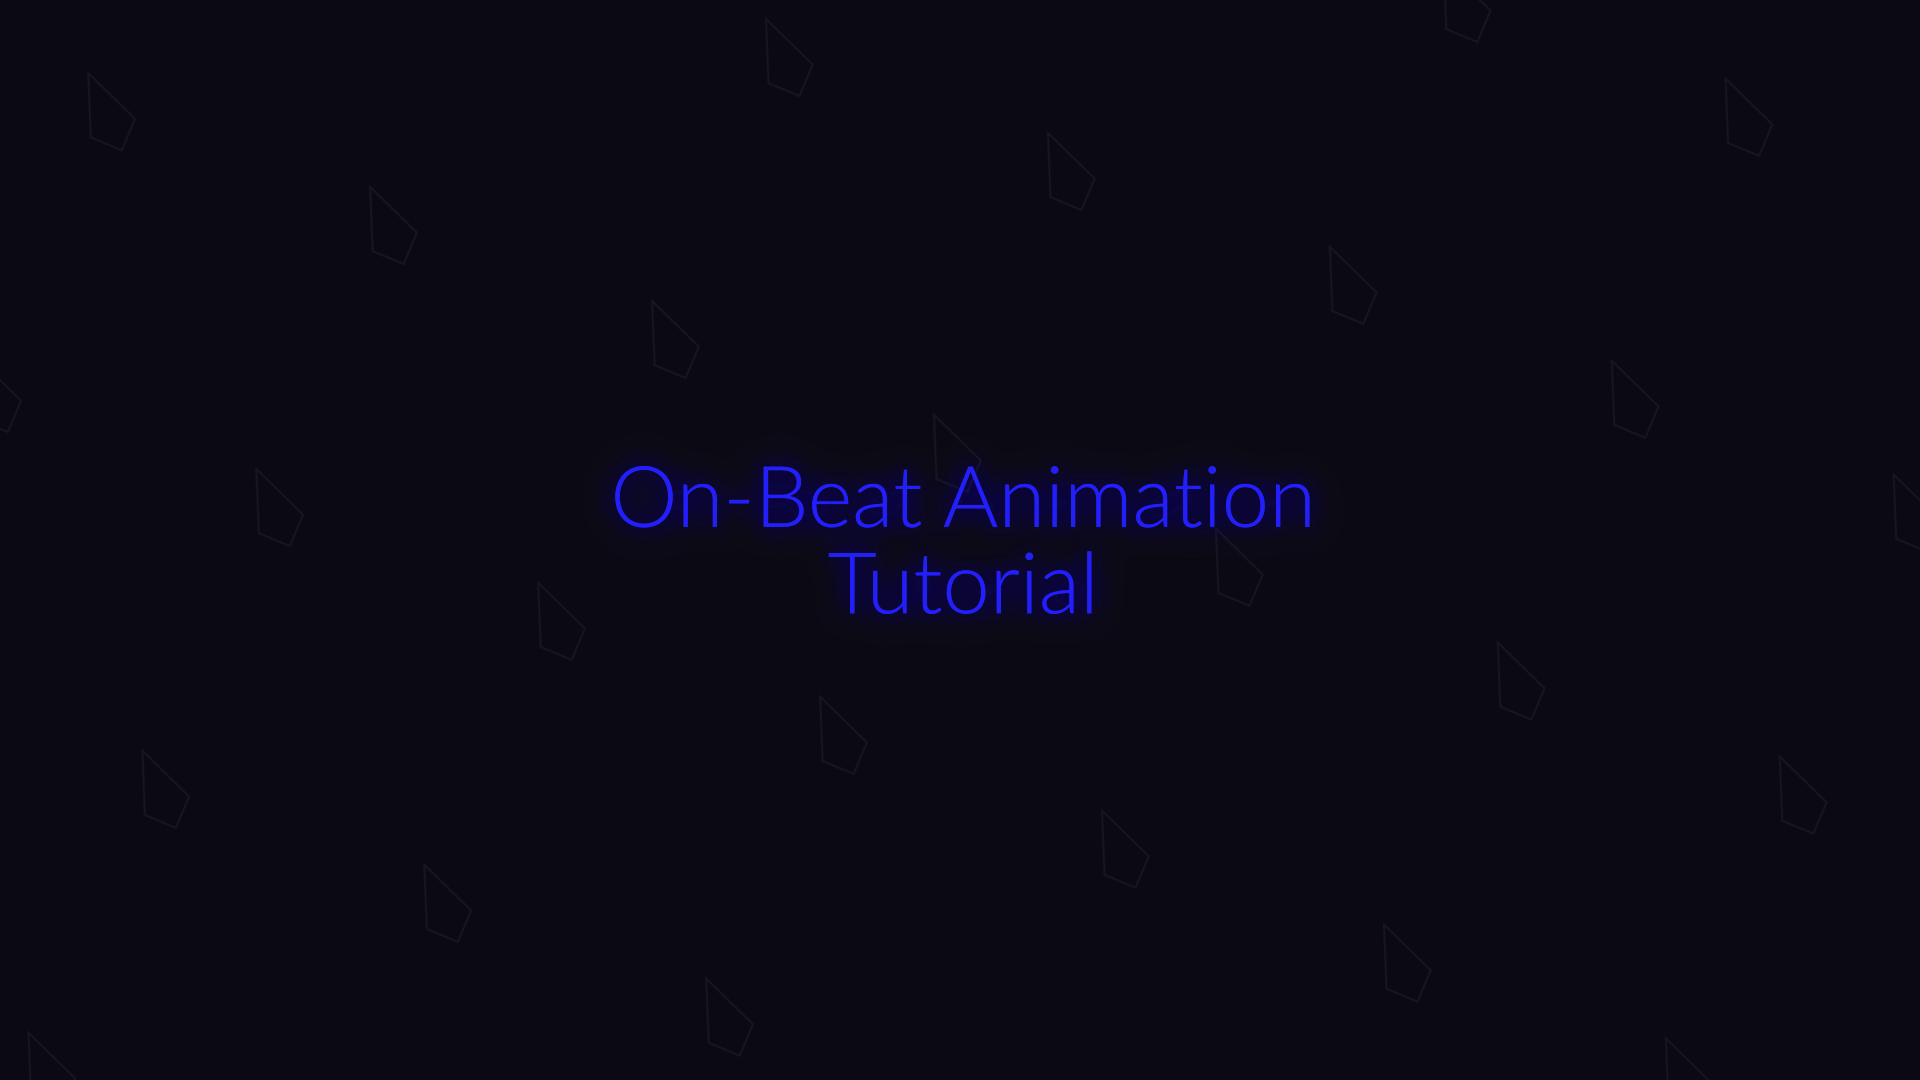 [Quantoz] On-Beat Animation tutorial